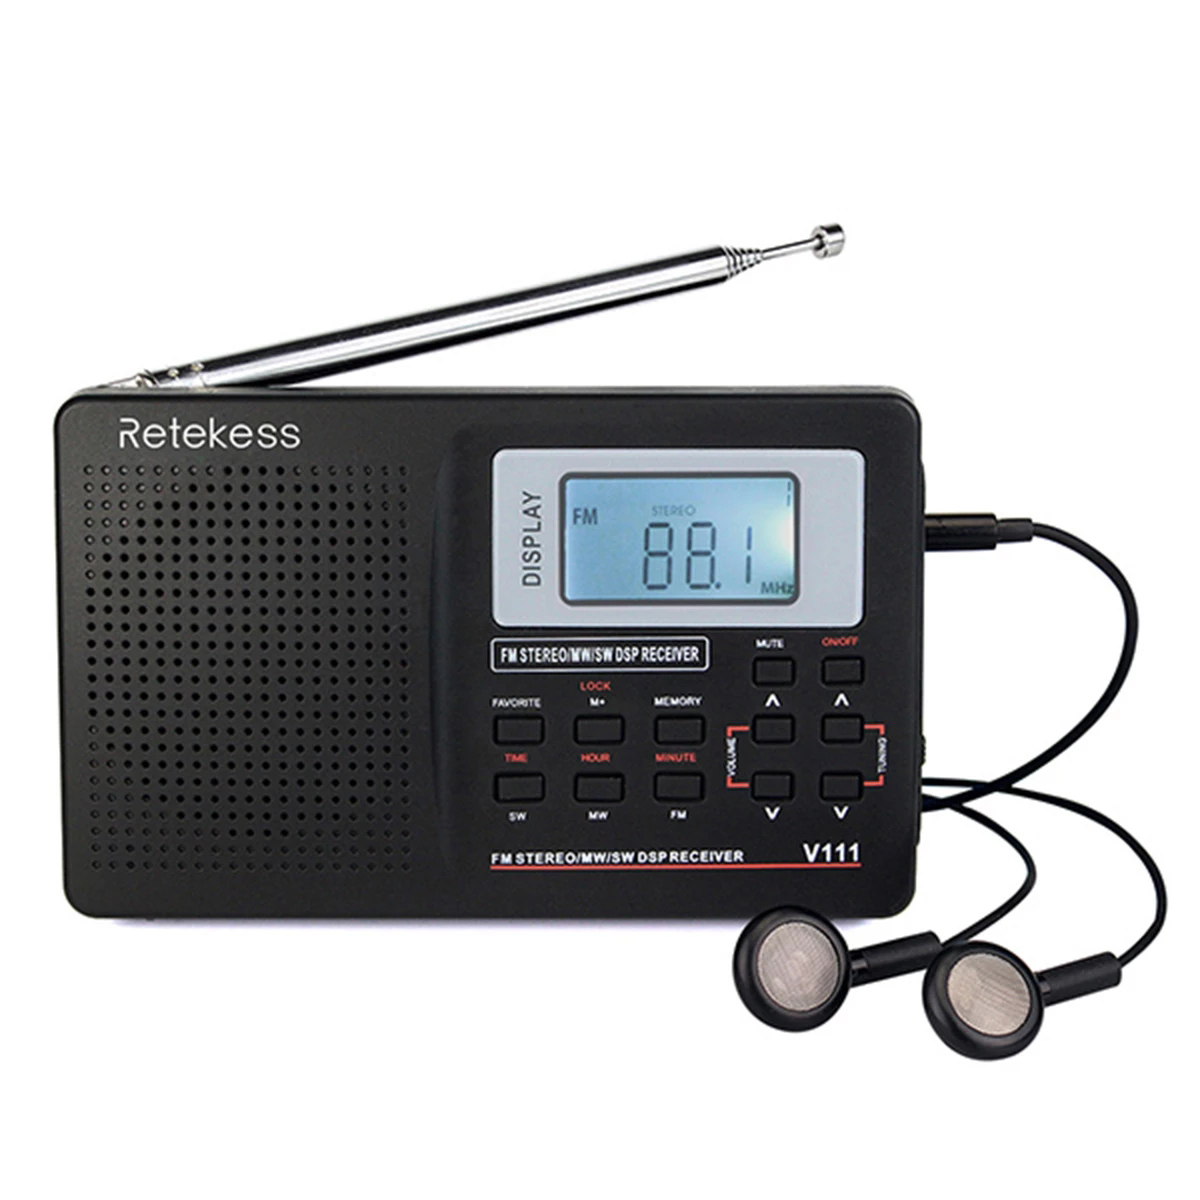 Retekess-V-111-Full-Band-Radio-FM-MW-SW-Stereo-Radio-Station-Receiver-Portable-Clock-Alarm-1897128-1